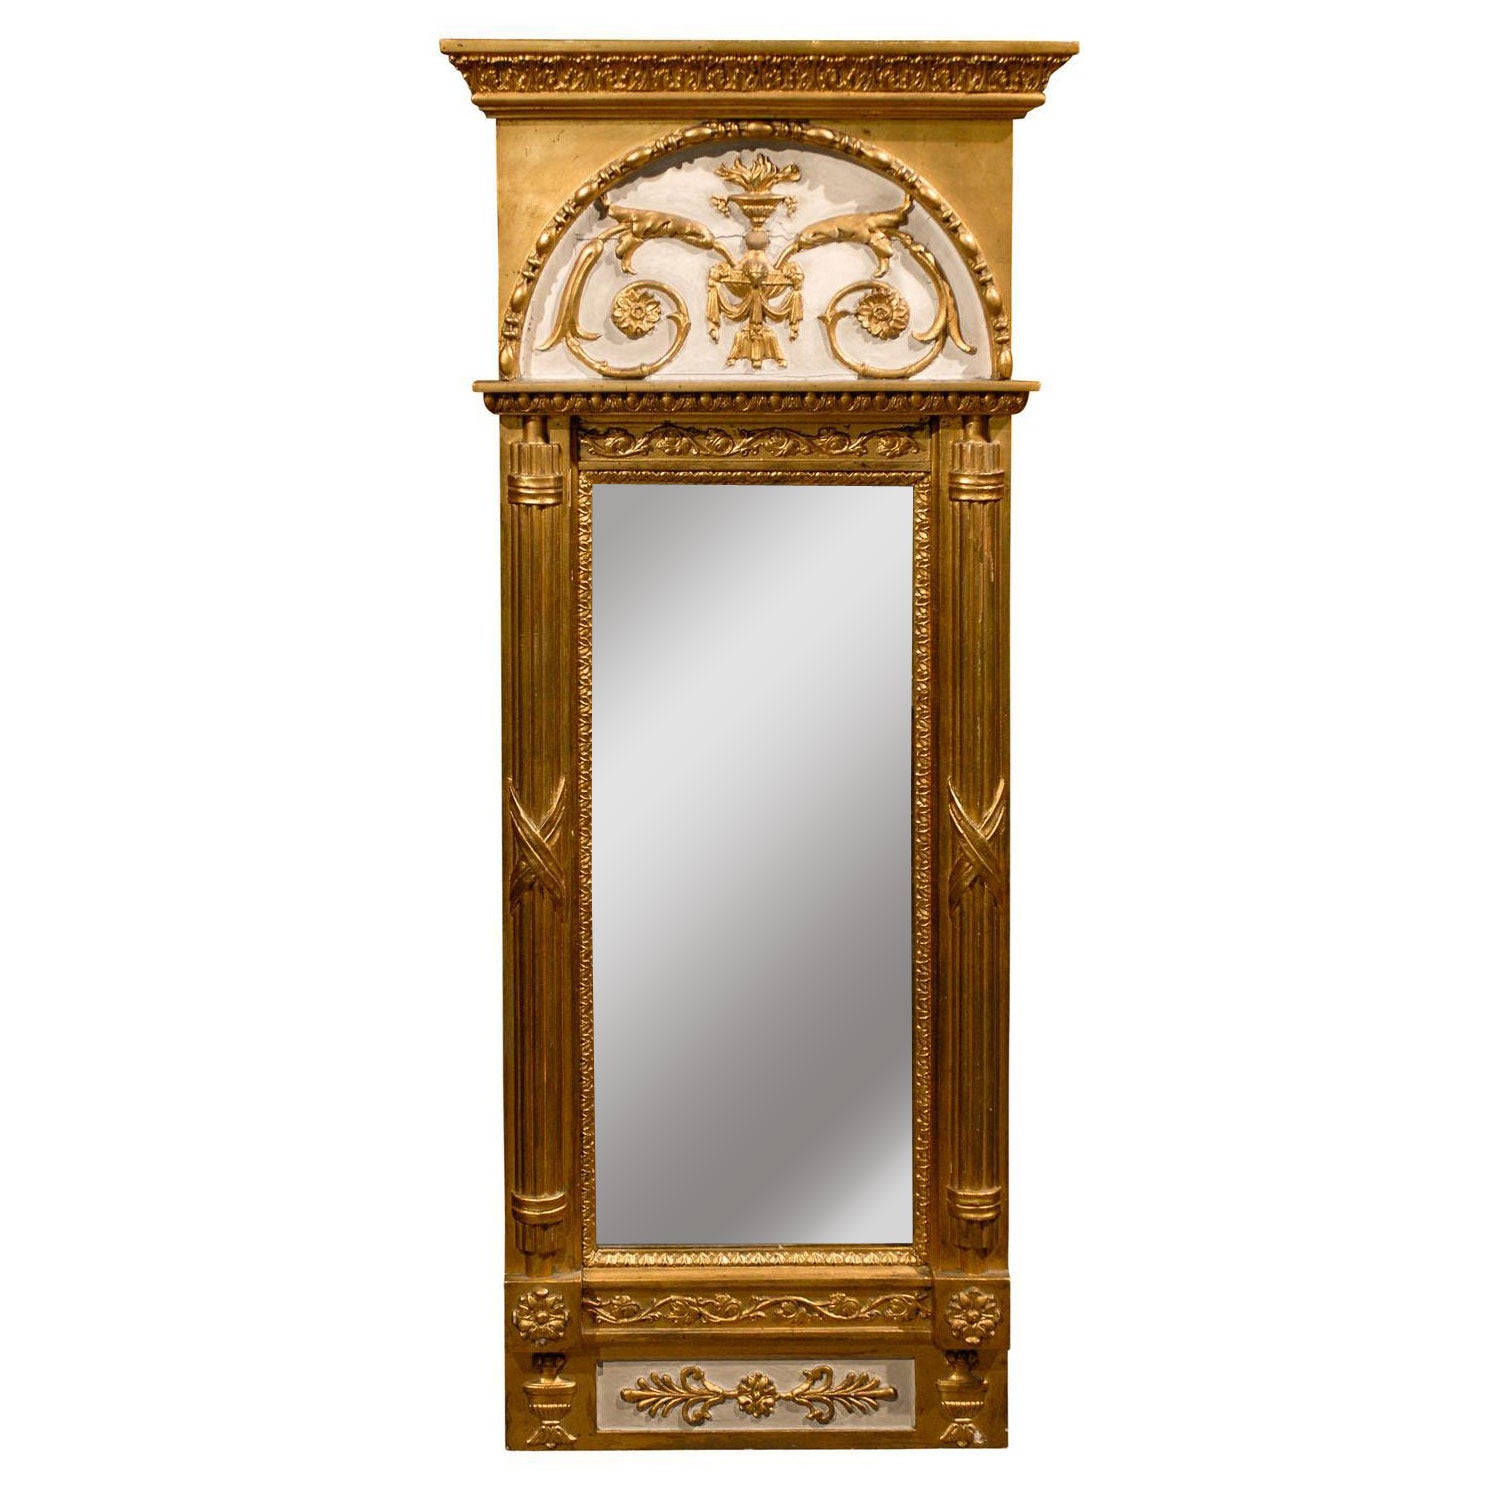 French Louis XVI Style Early 19th Century Narrow Giltwood Trumeau Mirror